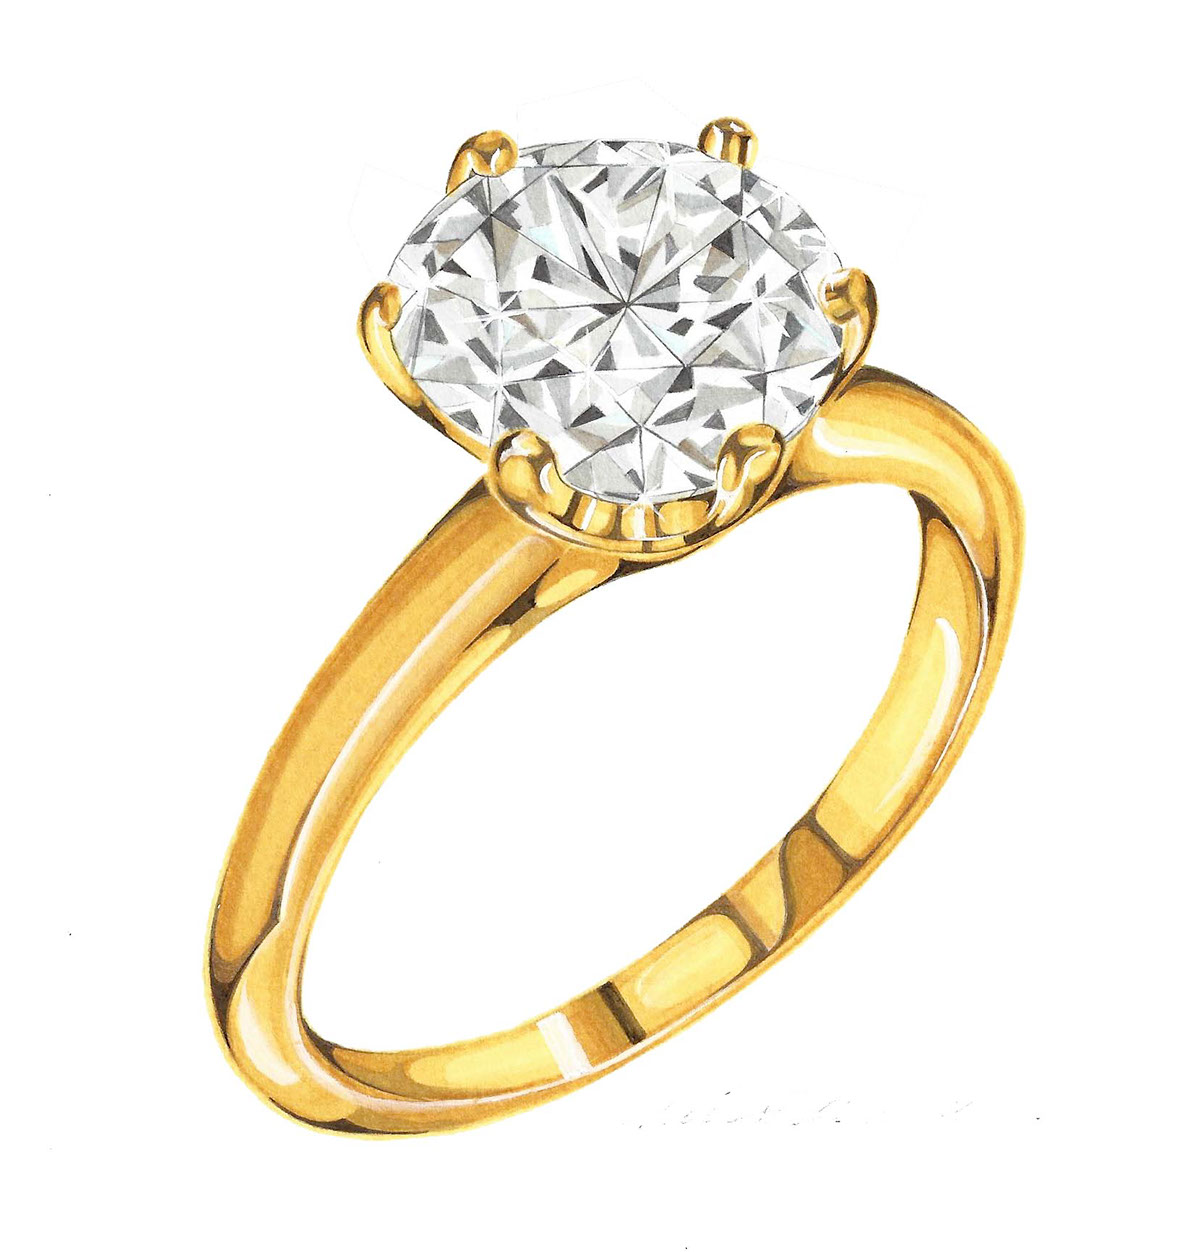 HANDMADE DESIGNS jewelry watercolor jewelry designer arts creative color draw gold gemstone diamonds Unique beauty desire